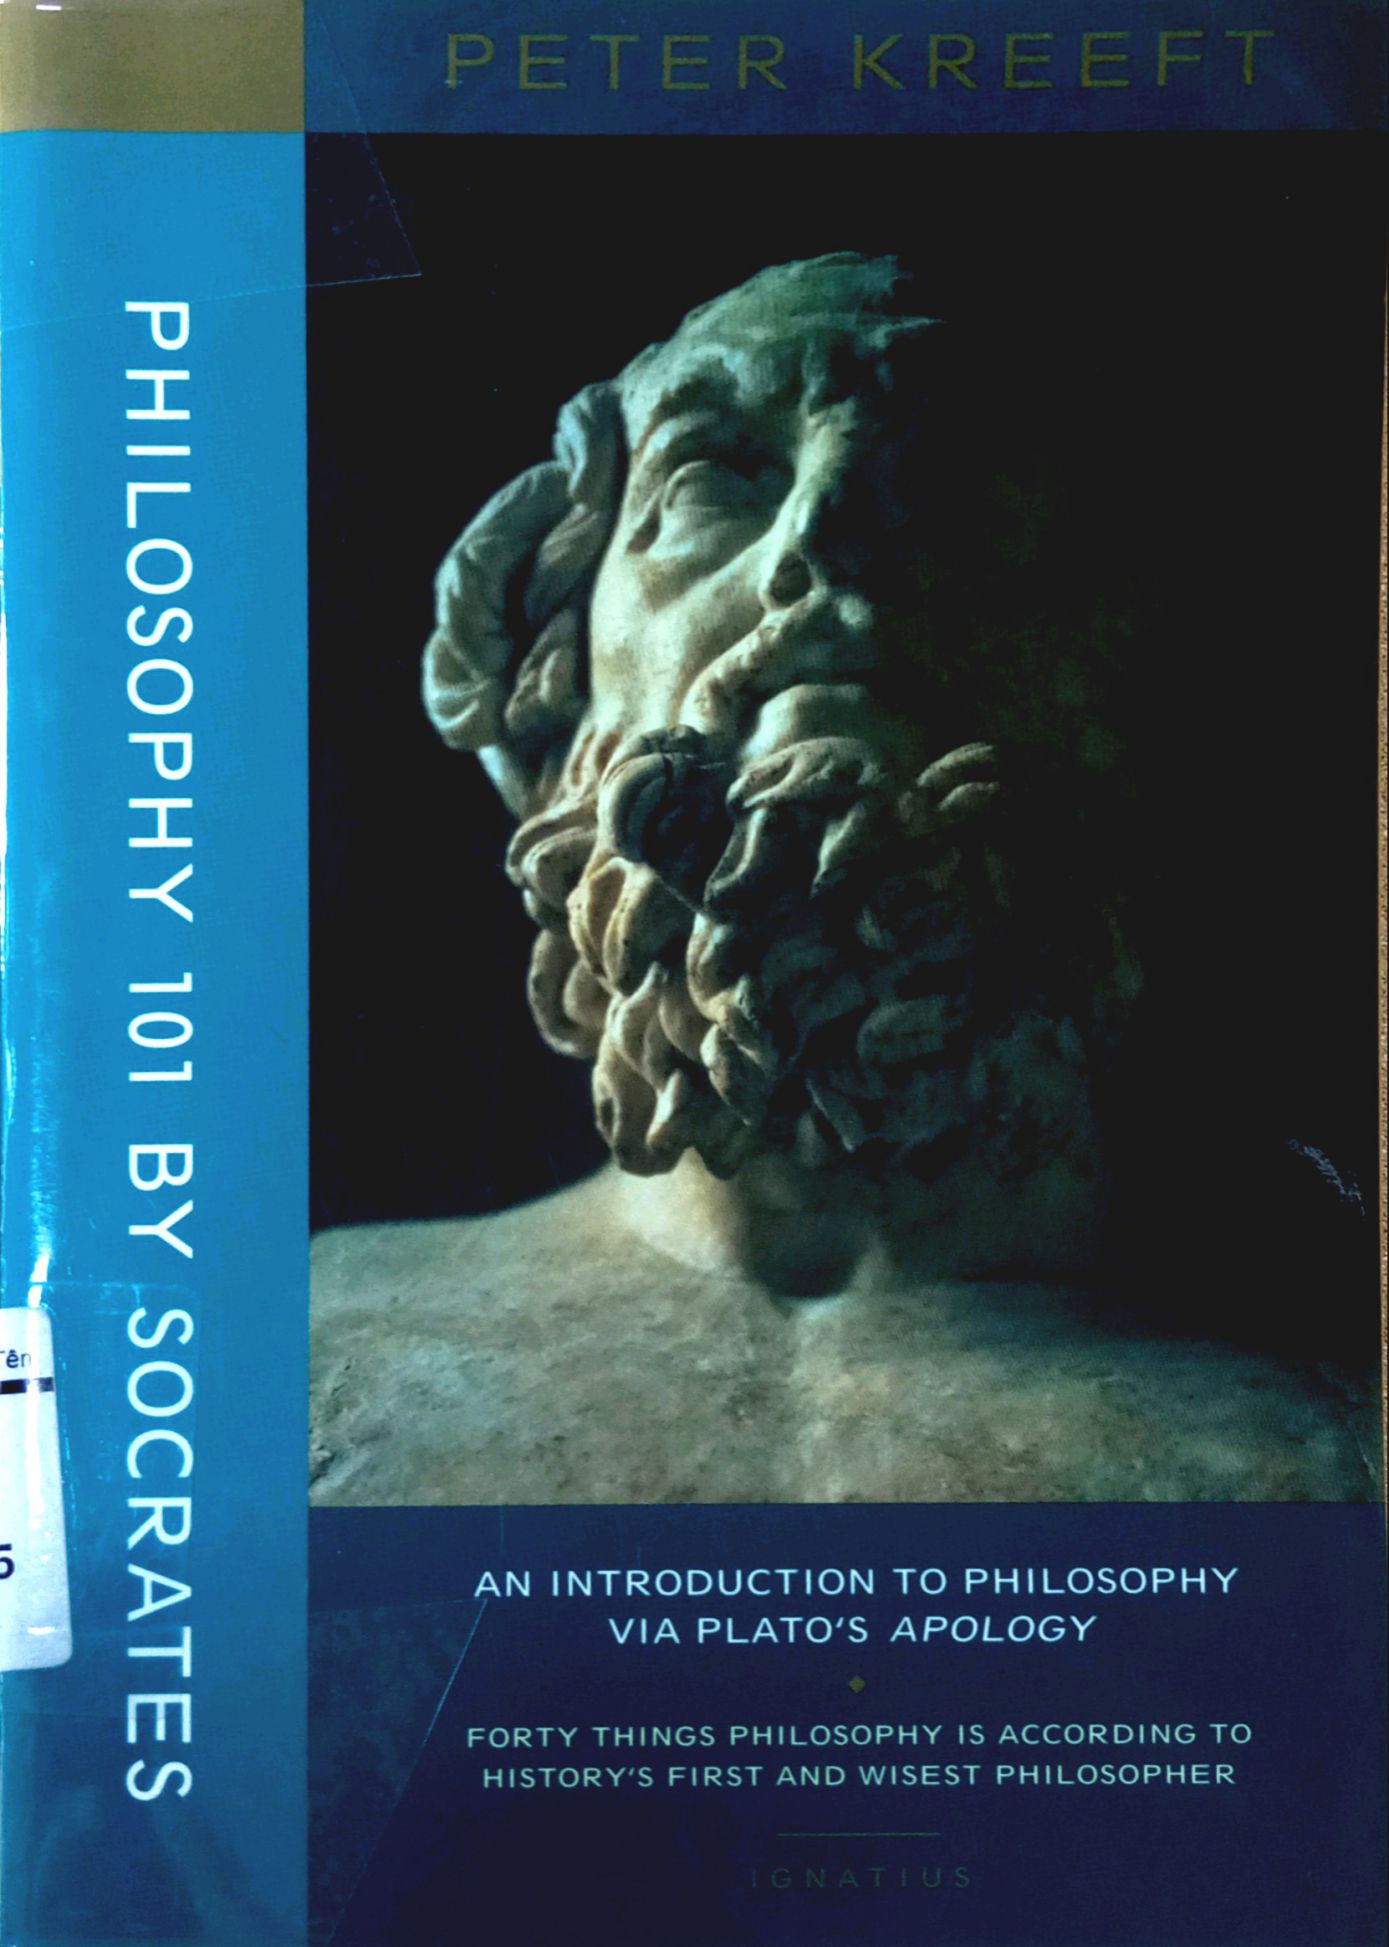 PHILOSOPHY 101 BY SOCRATES